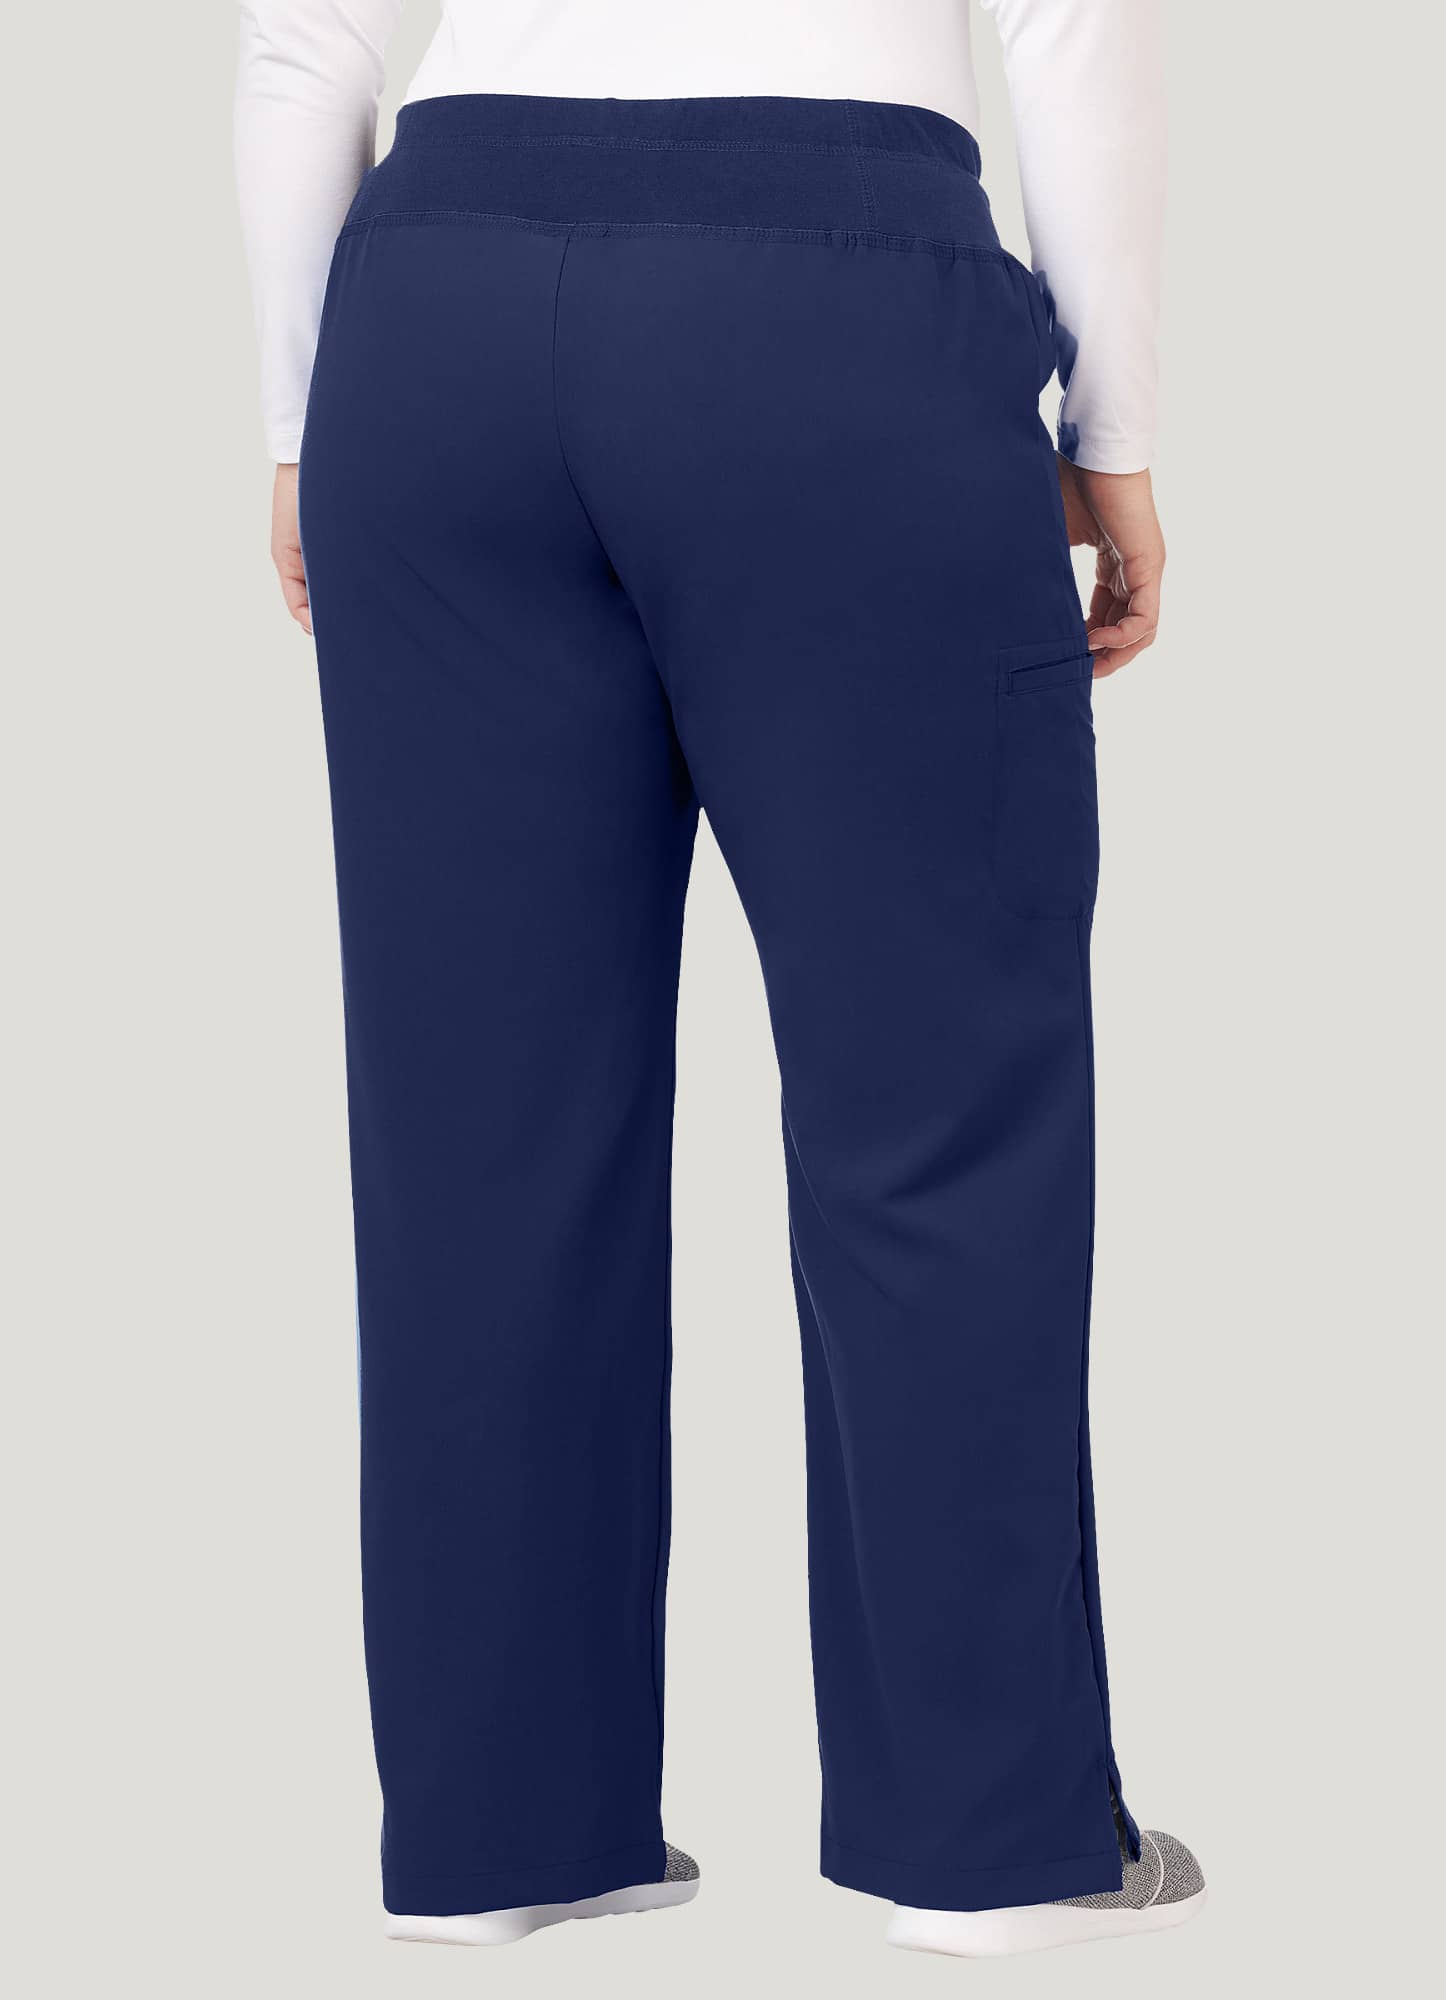 Jockey Women's Premium Pocket Yoga Pant, Graphite, Small : :  Clothing, Shoes & Accessories